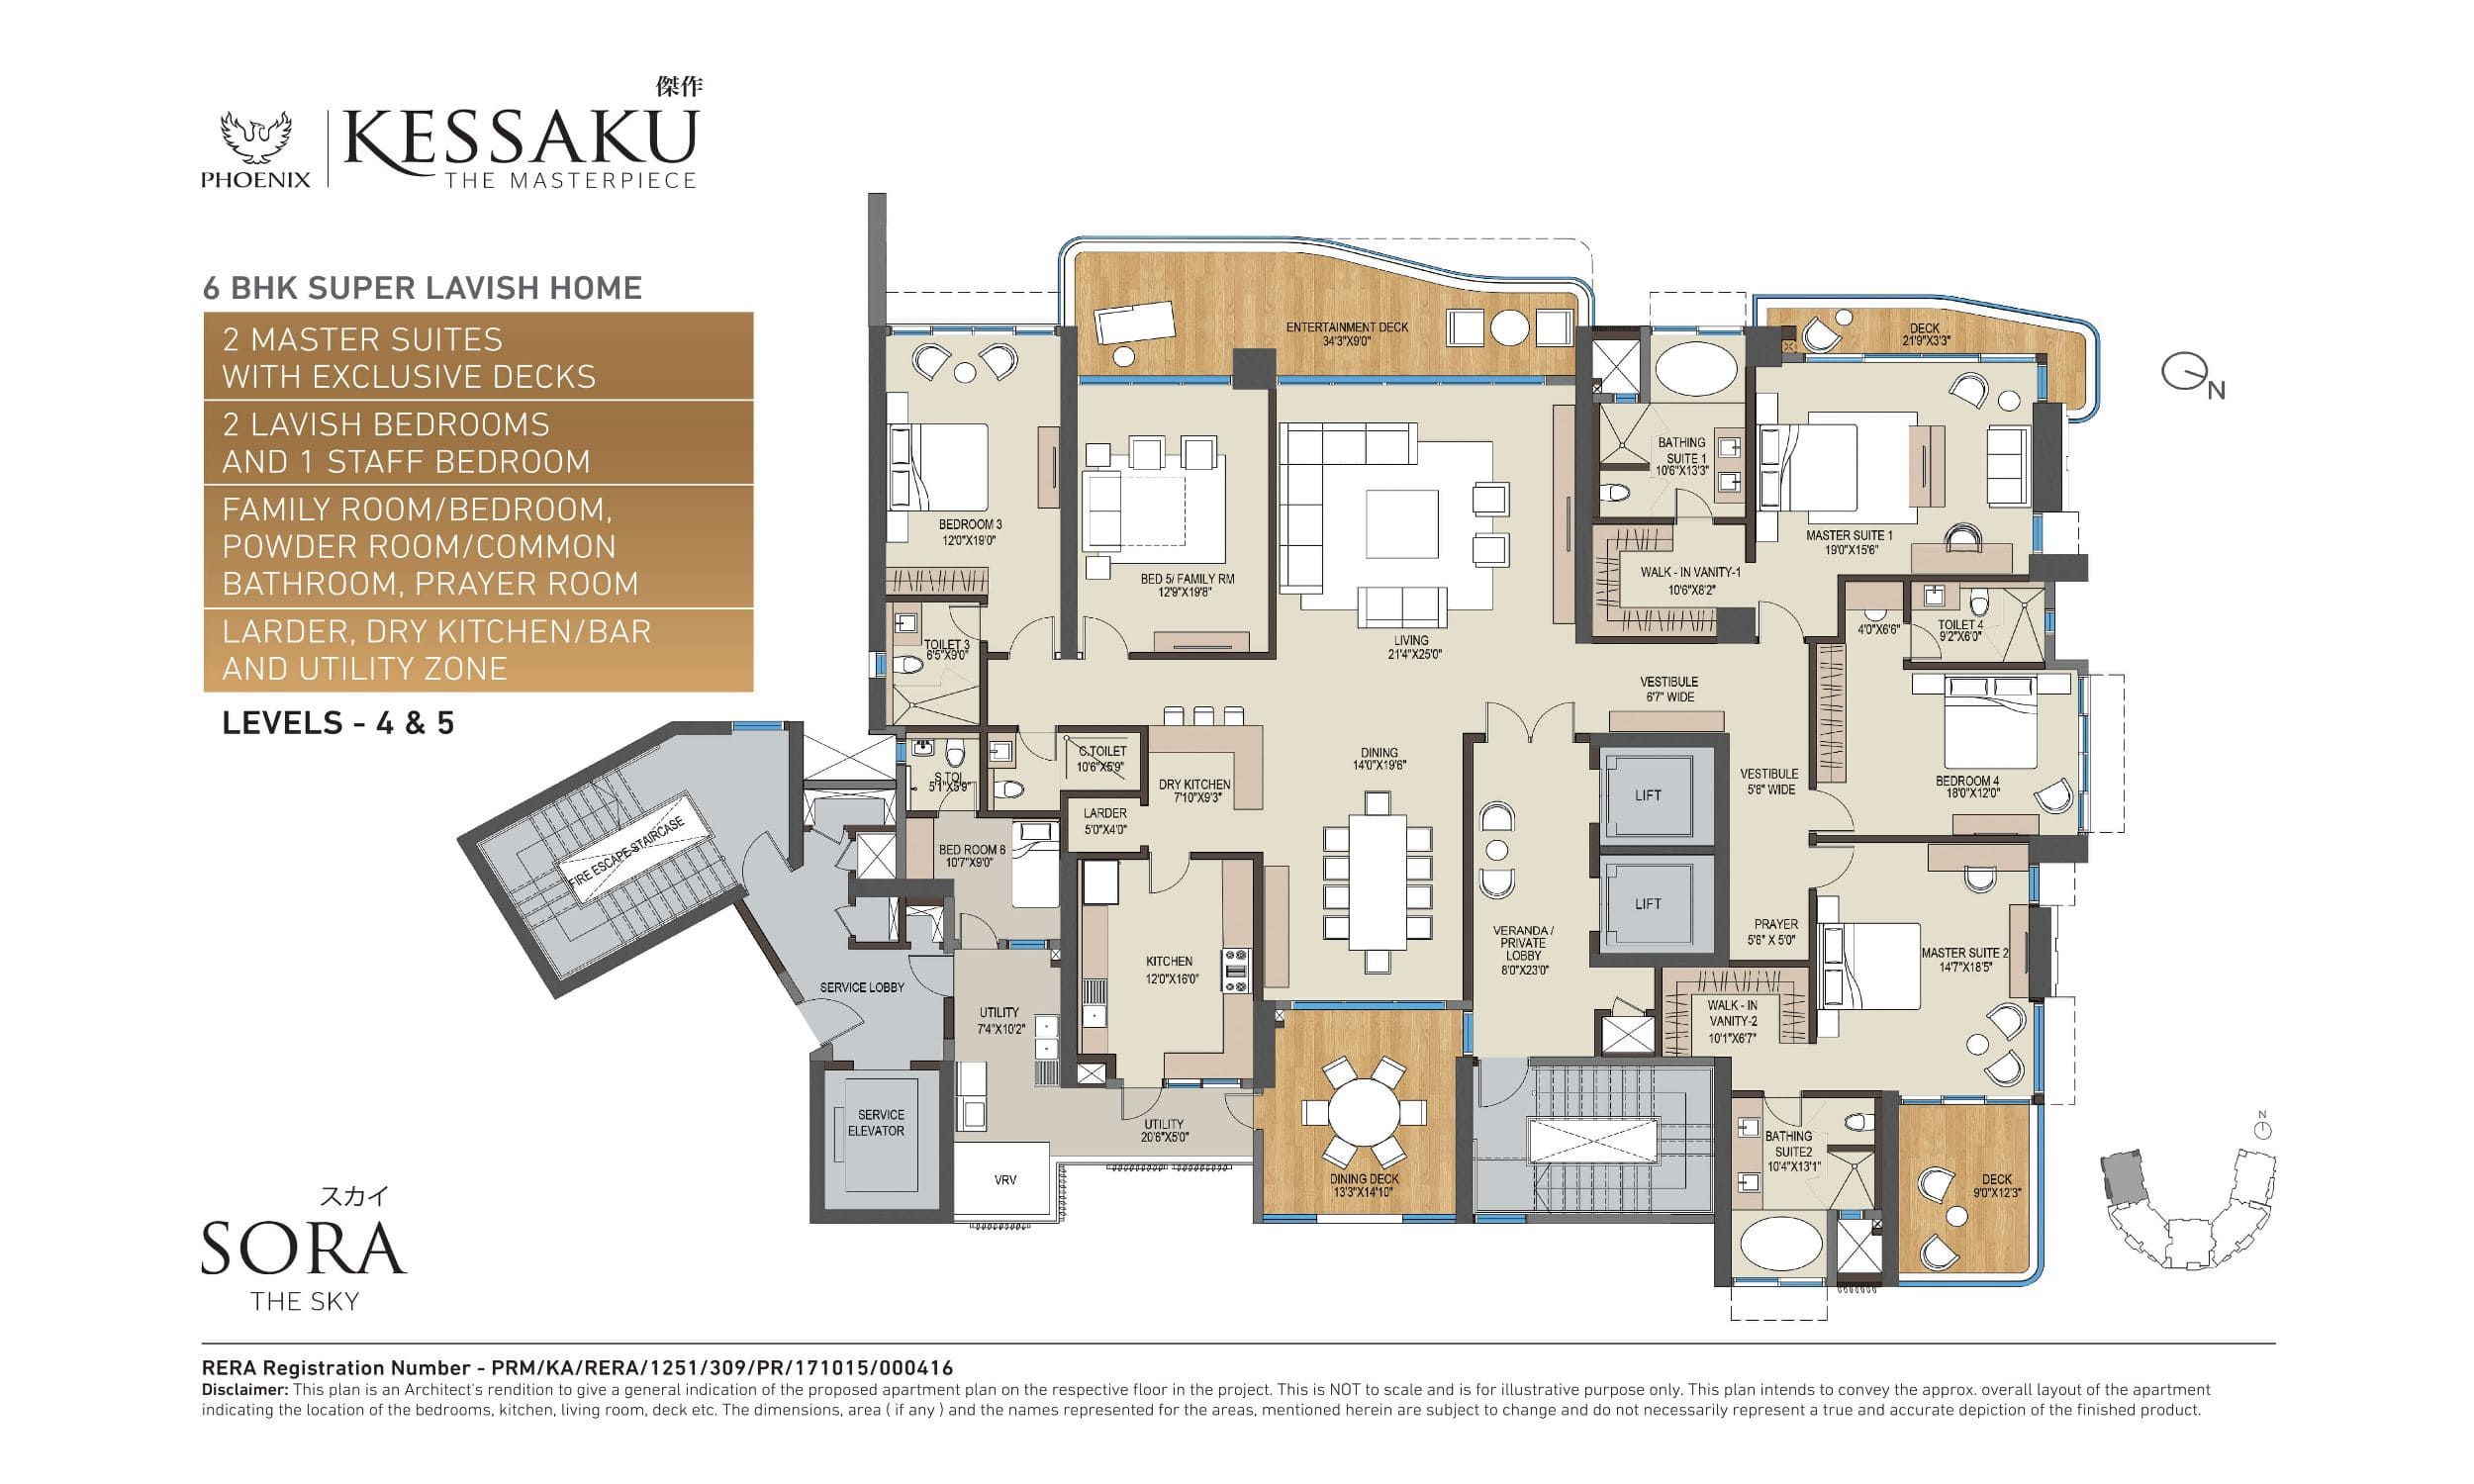 Phoenix Kessaku SORA Floor Plans (4)